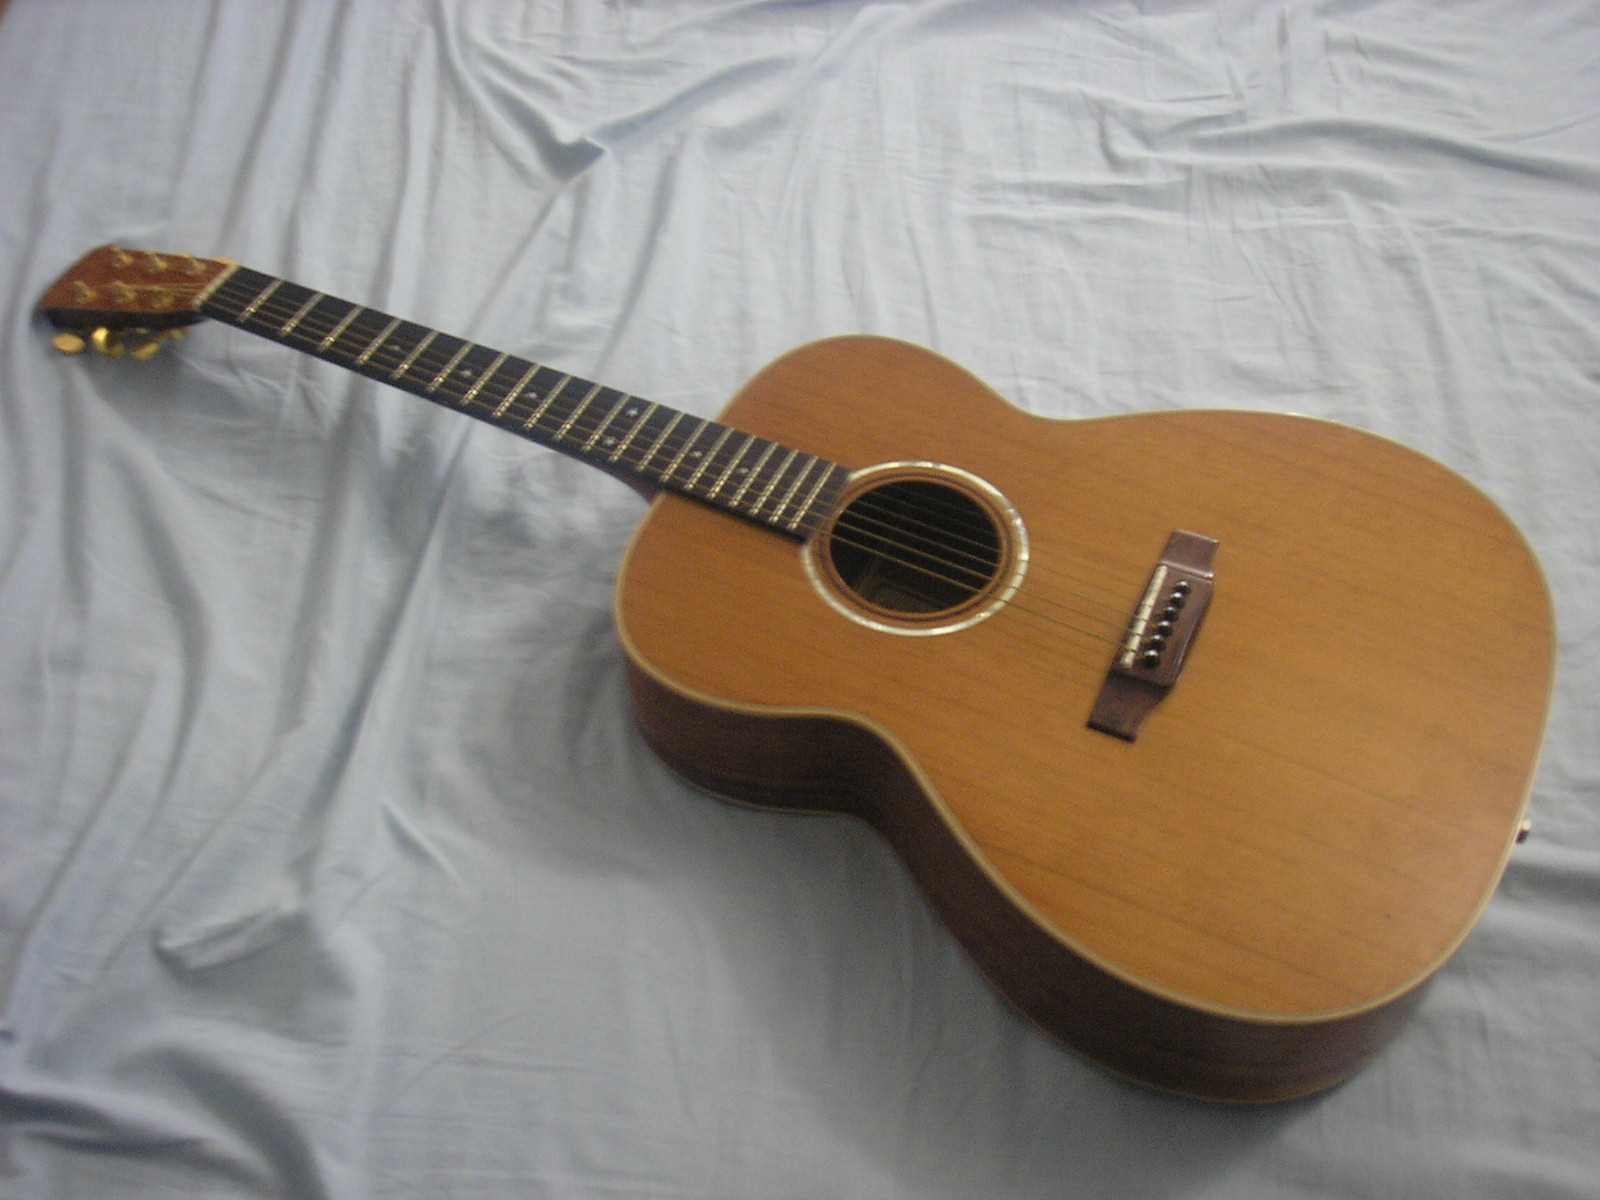 http://upload.wikimedia.org/wikipedia/commons/c/c2/Acoustic_guitar.jpg